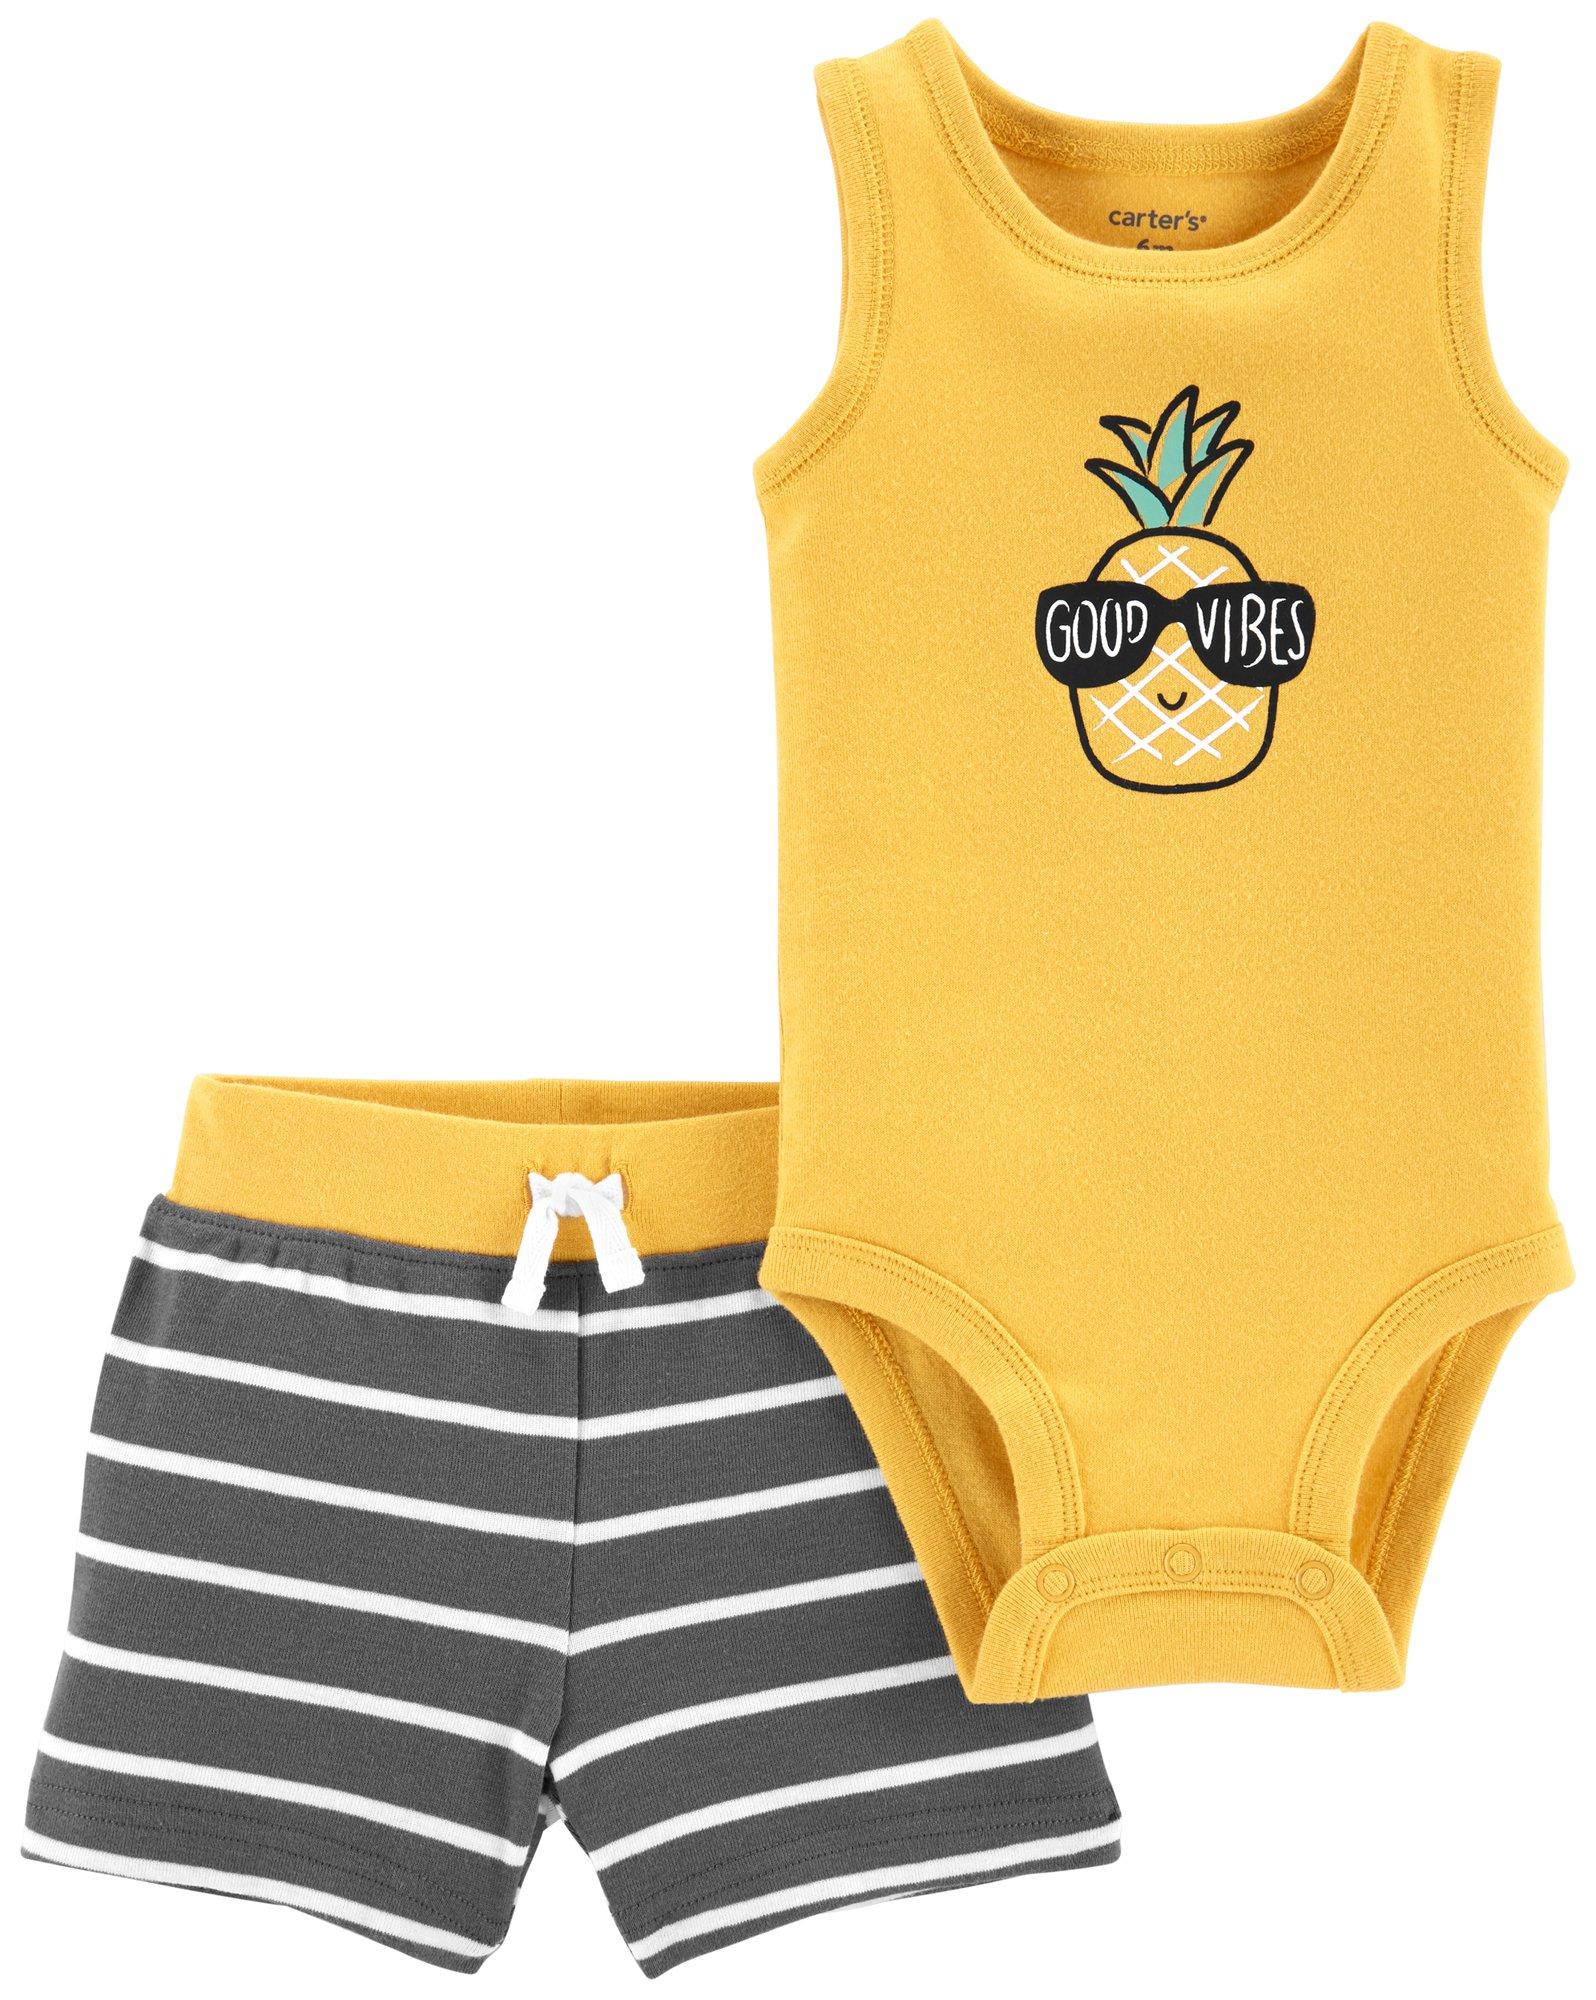 Carters Baby Boys Mix Stripe Button Down Shorts Set 6 Months Blue/Yellow/White 